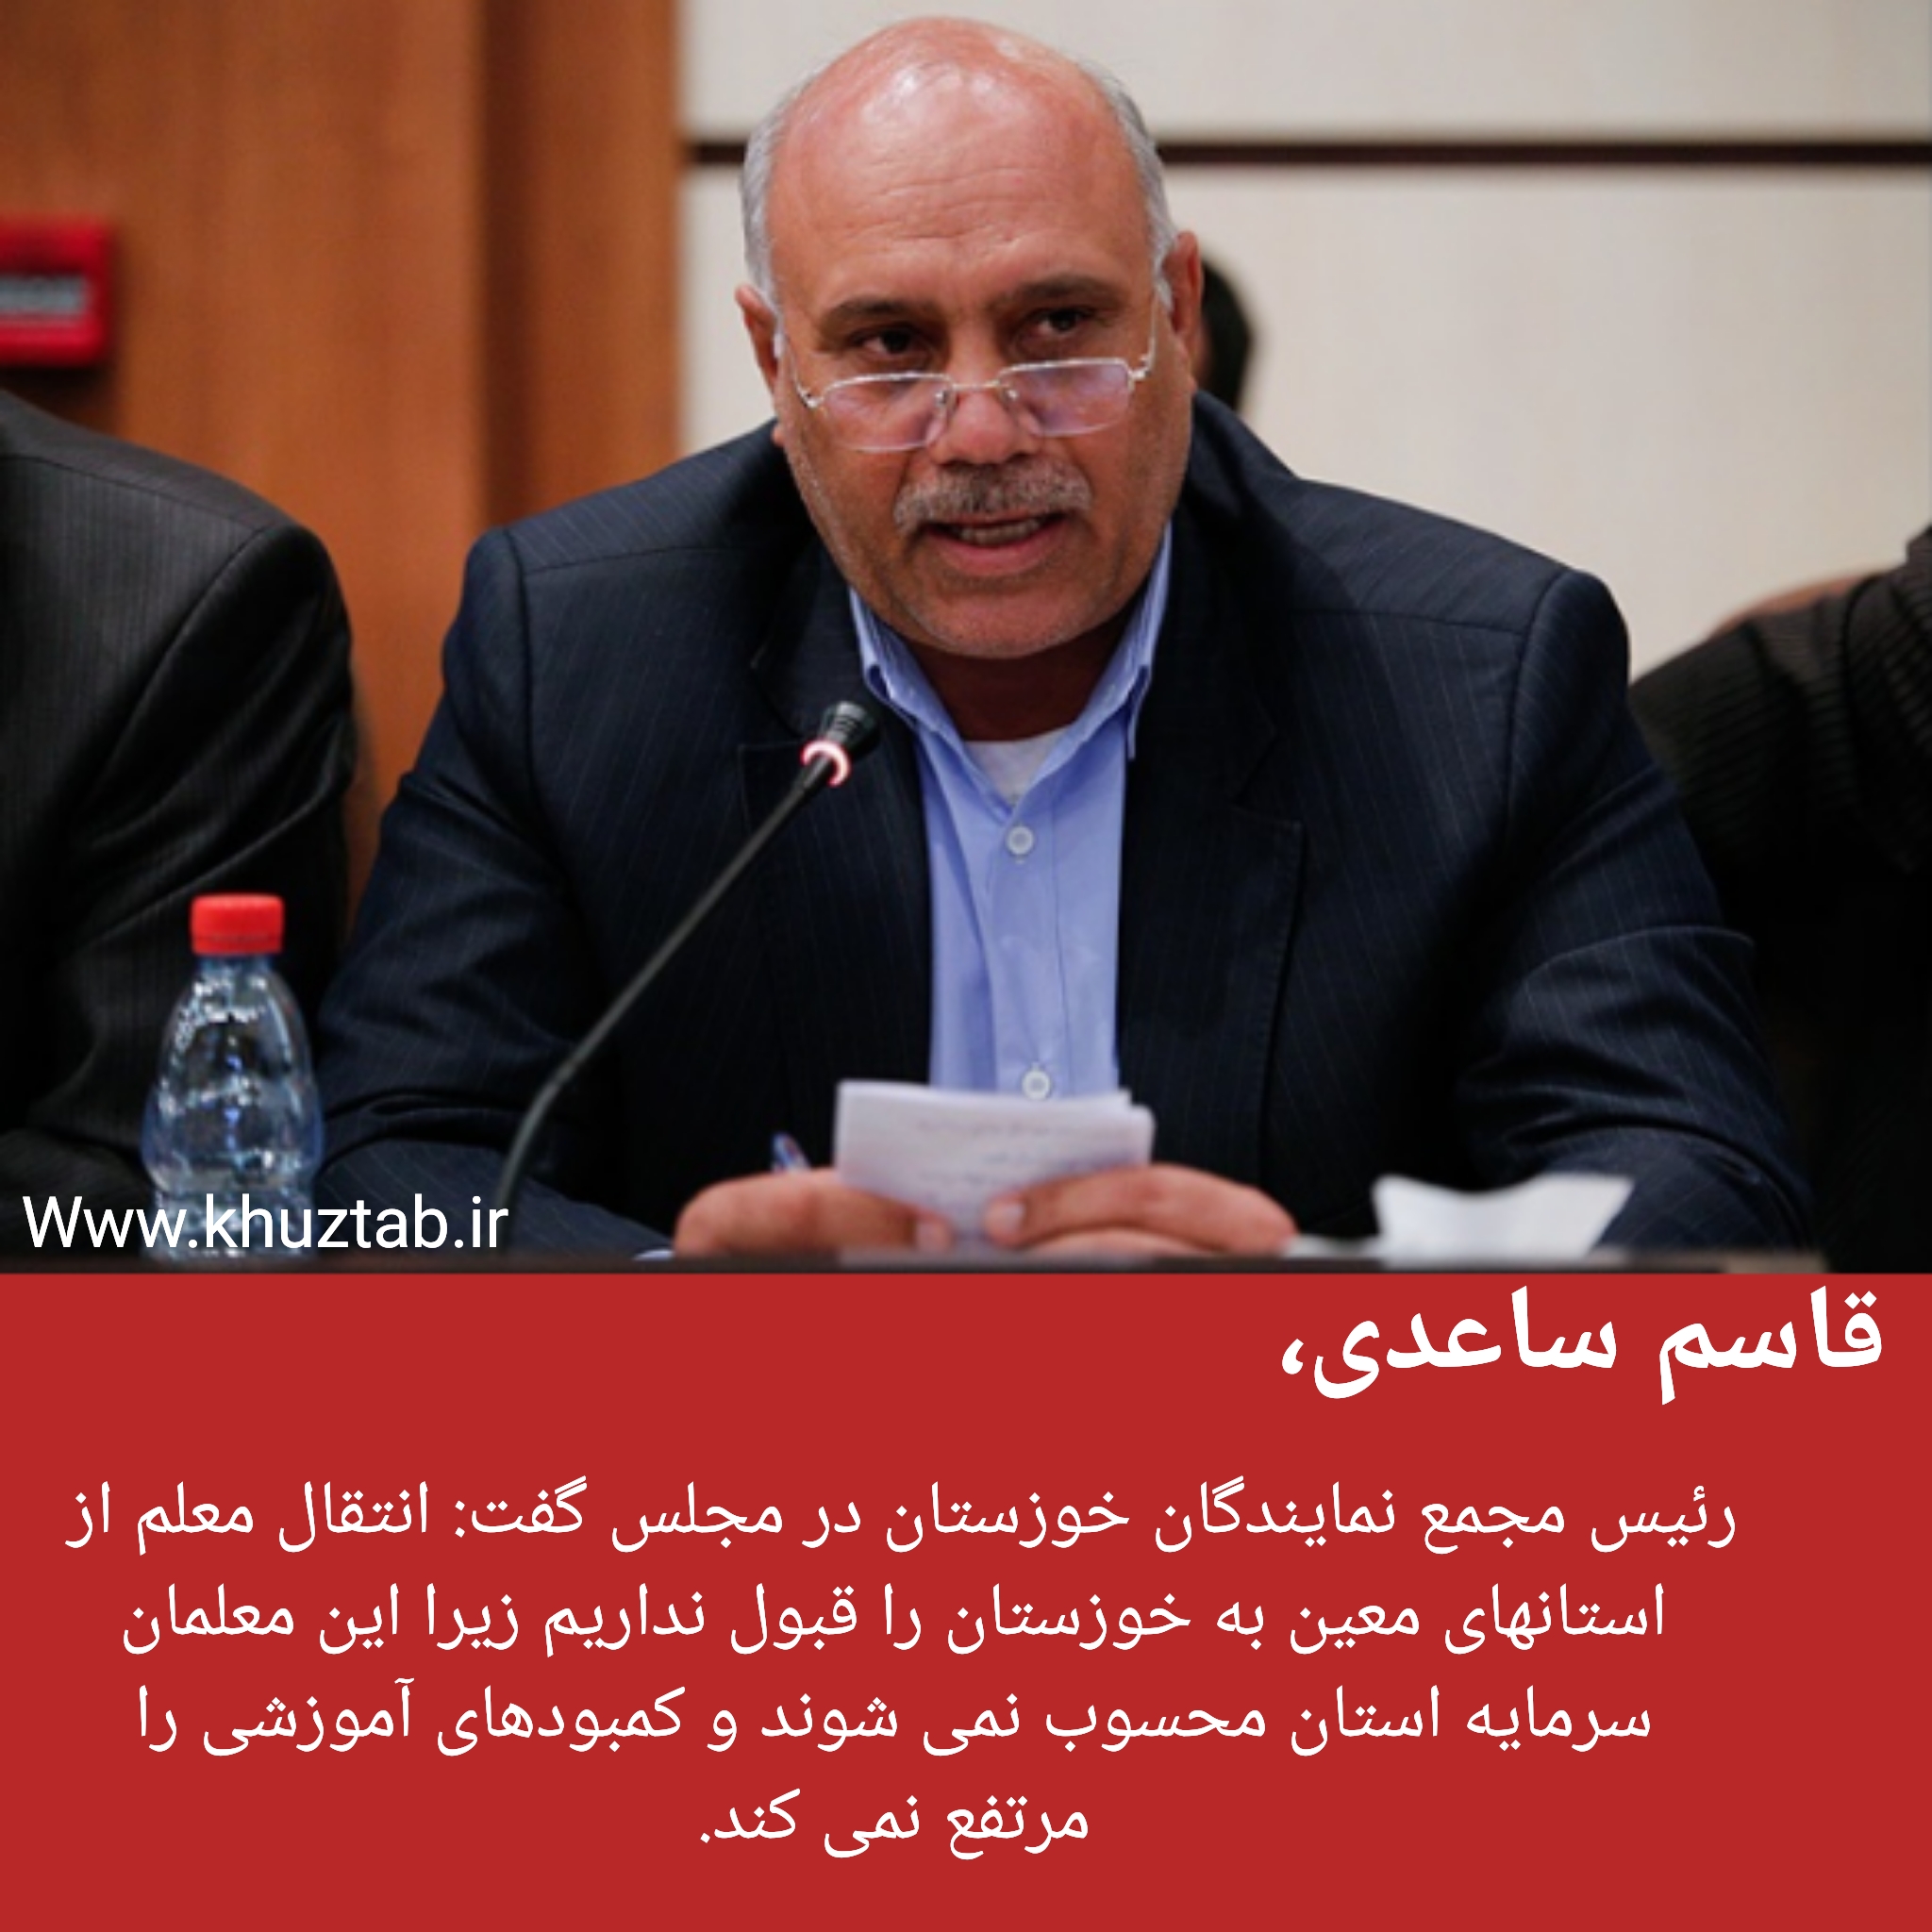 PhotoGrid 1564050331469 معلمان مهمان سرمایه خوزستان محسوب نمی شوند